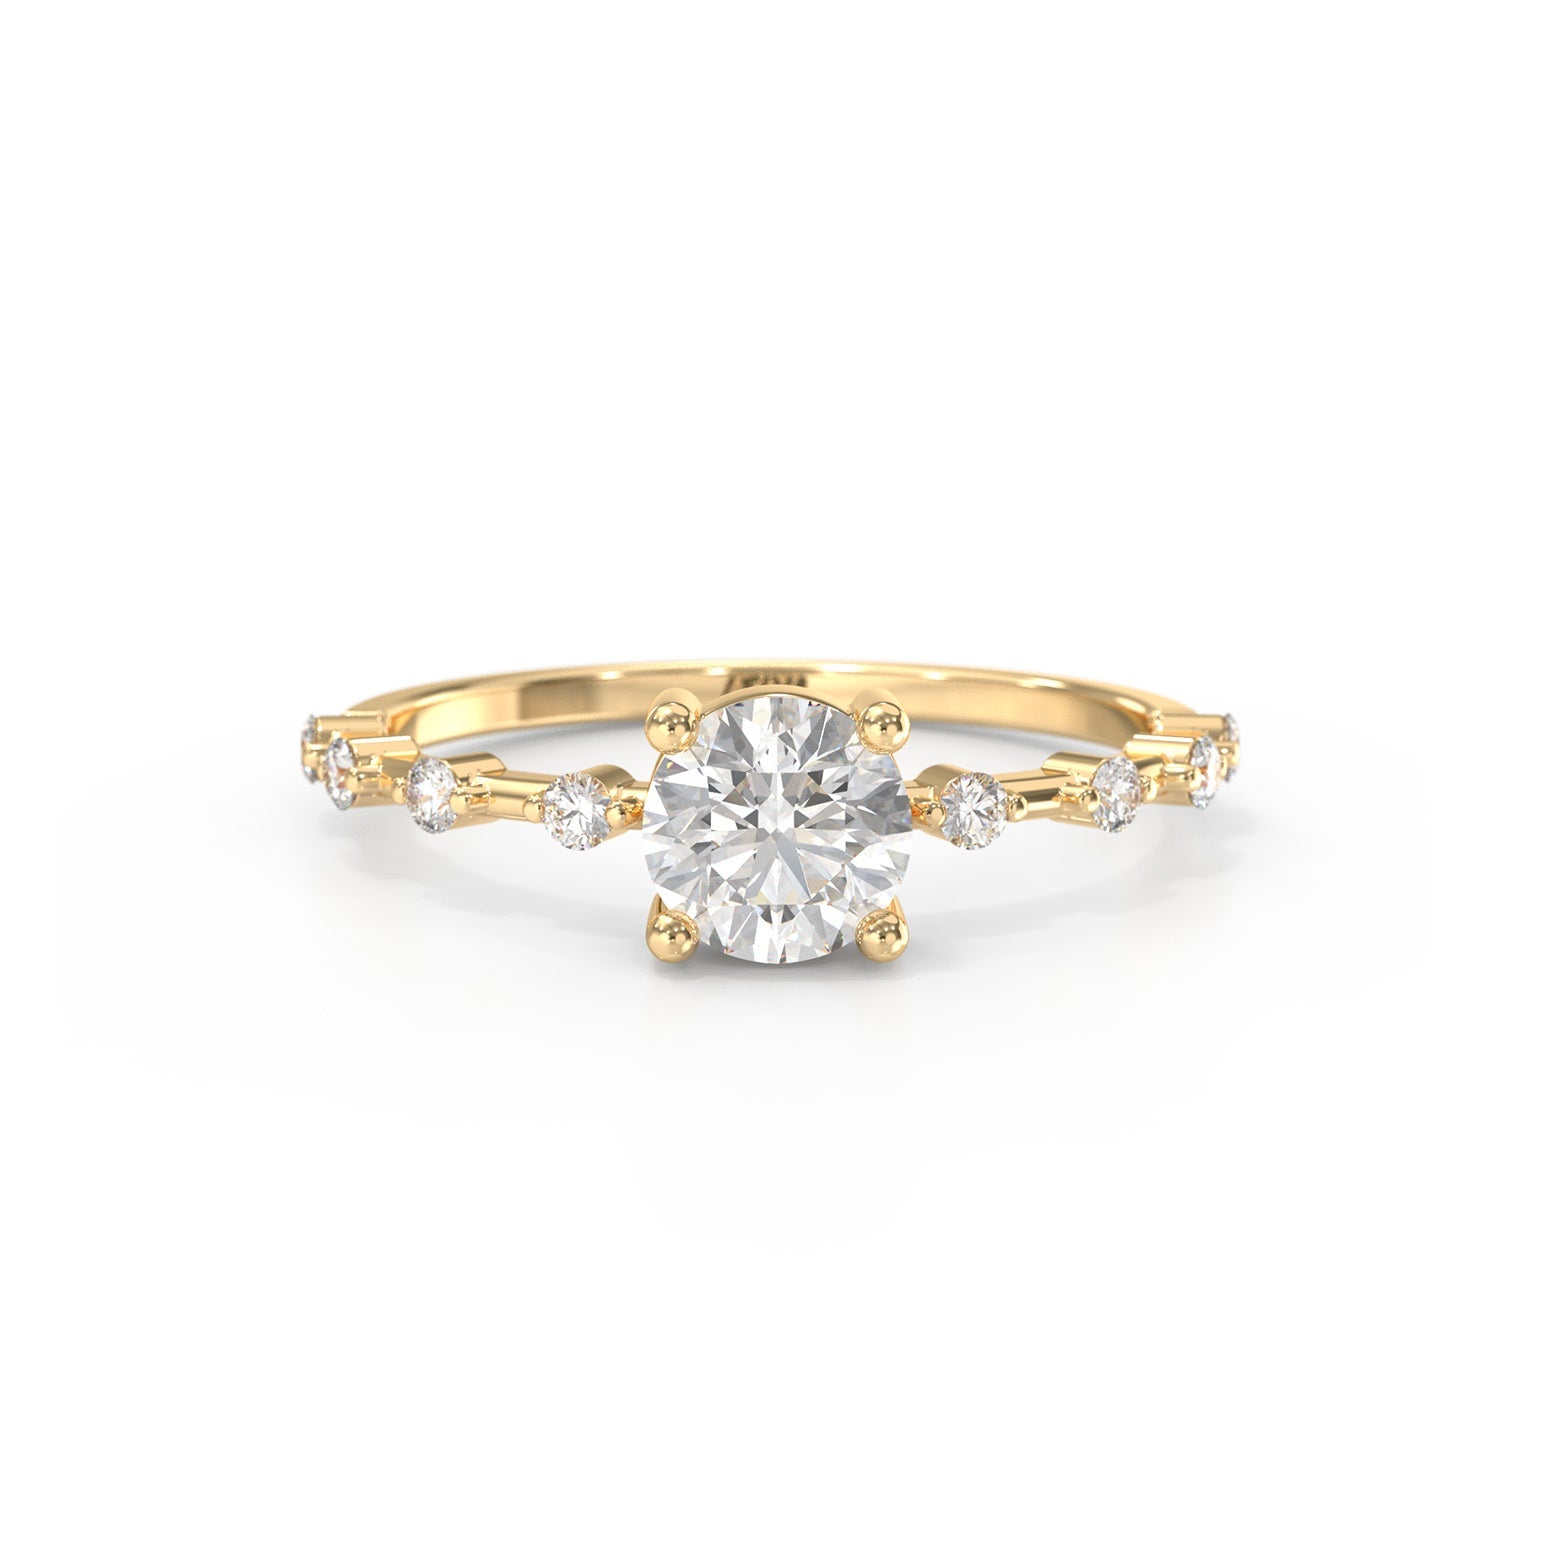 Diamond Halley Ice Ring - Lelya - bespoke engagement and wedding rings made in Scotland, UK